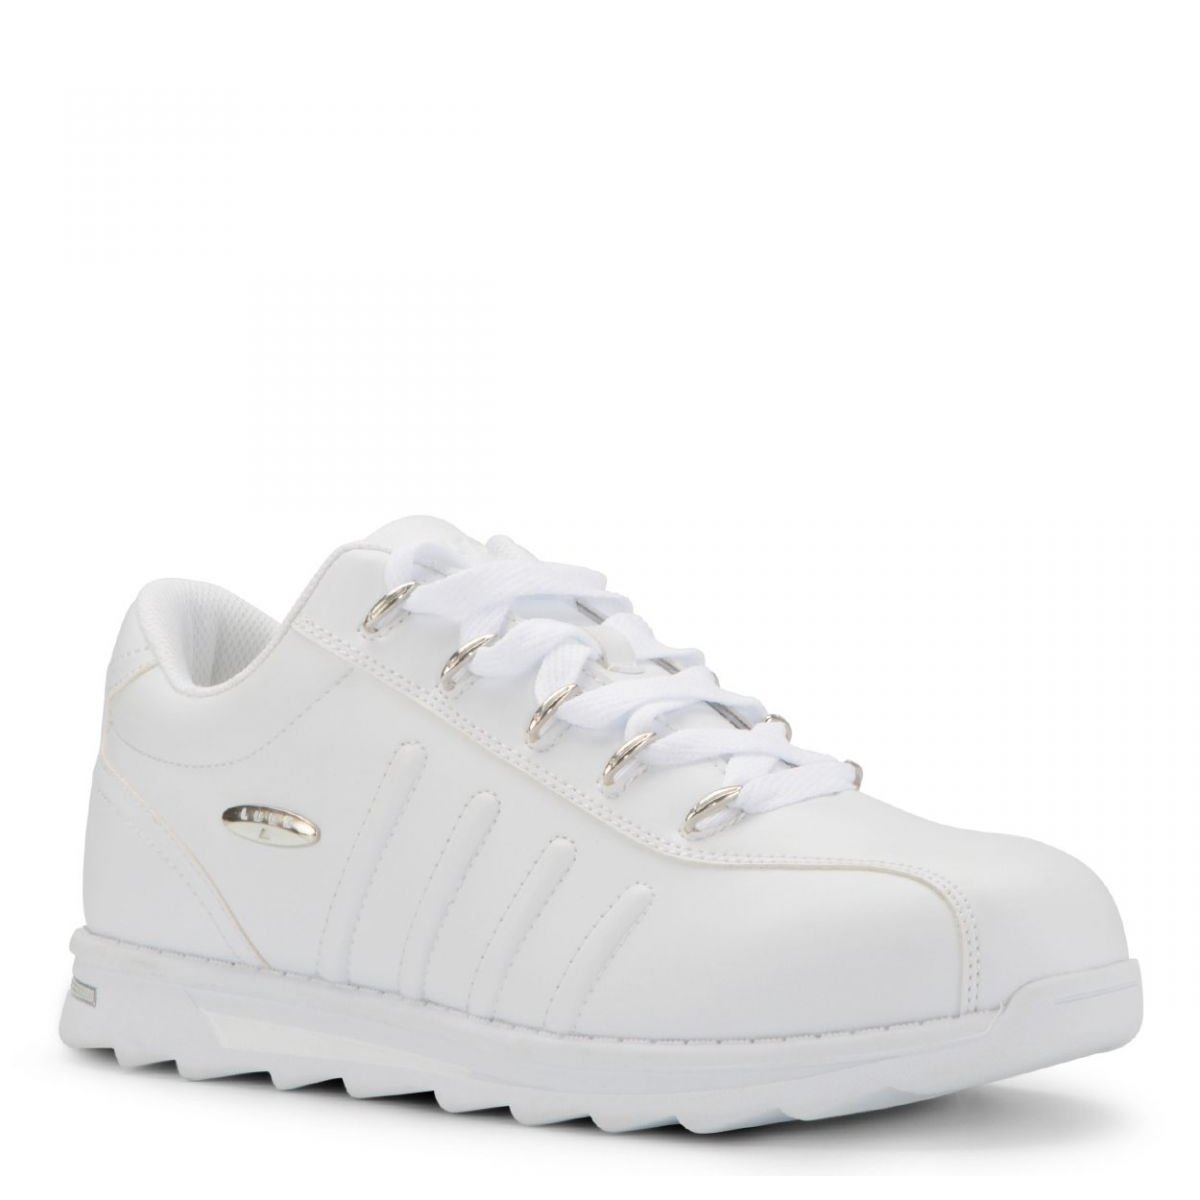 Lugz Men's Changeover II Sneaker White - MCHGIIV-100 WHITE - WHITE, 8